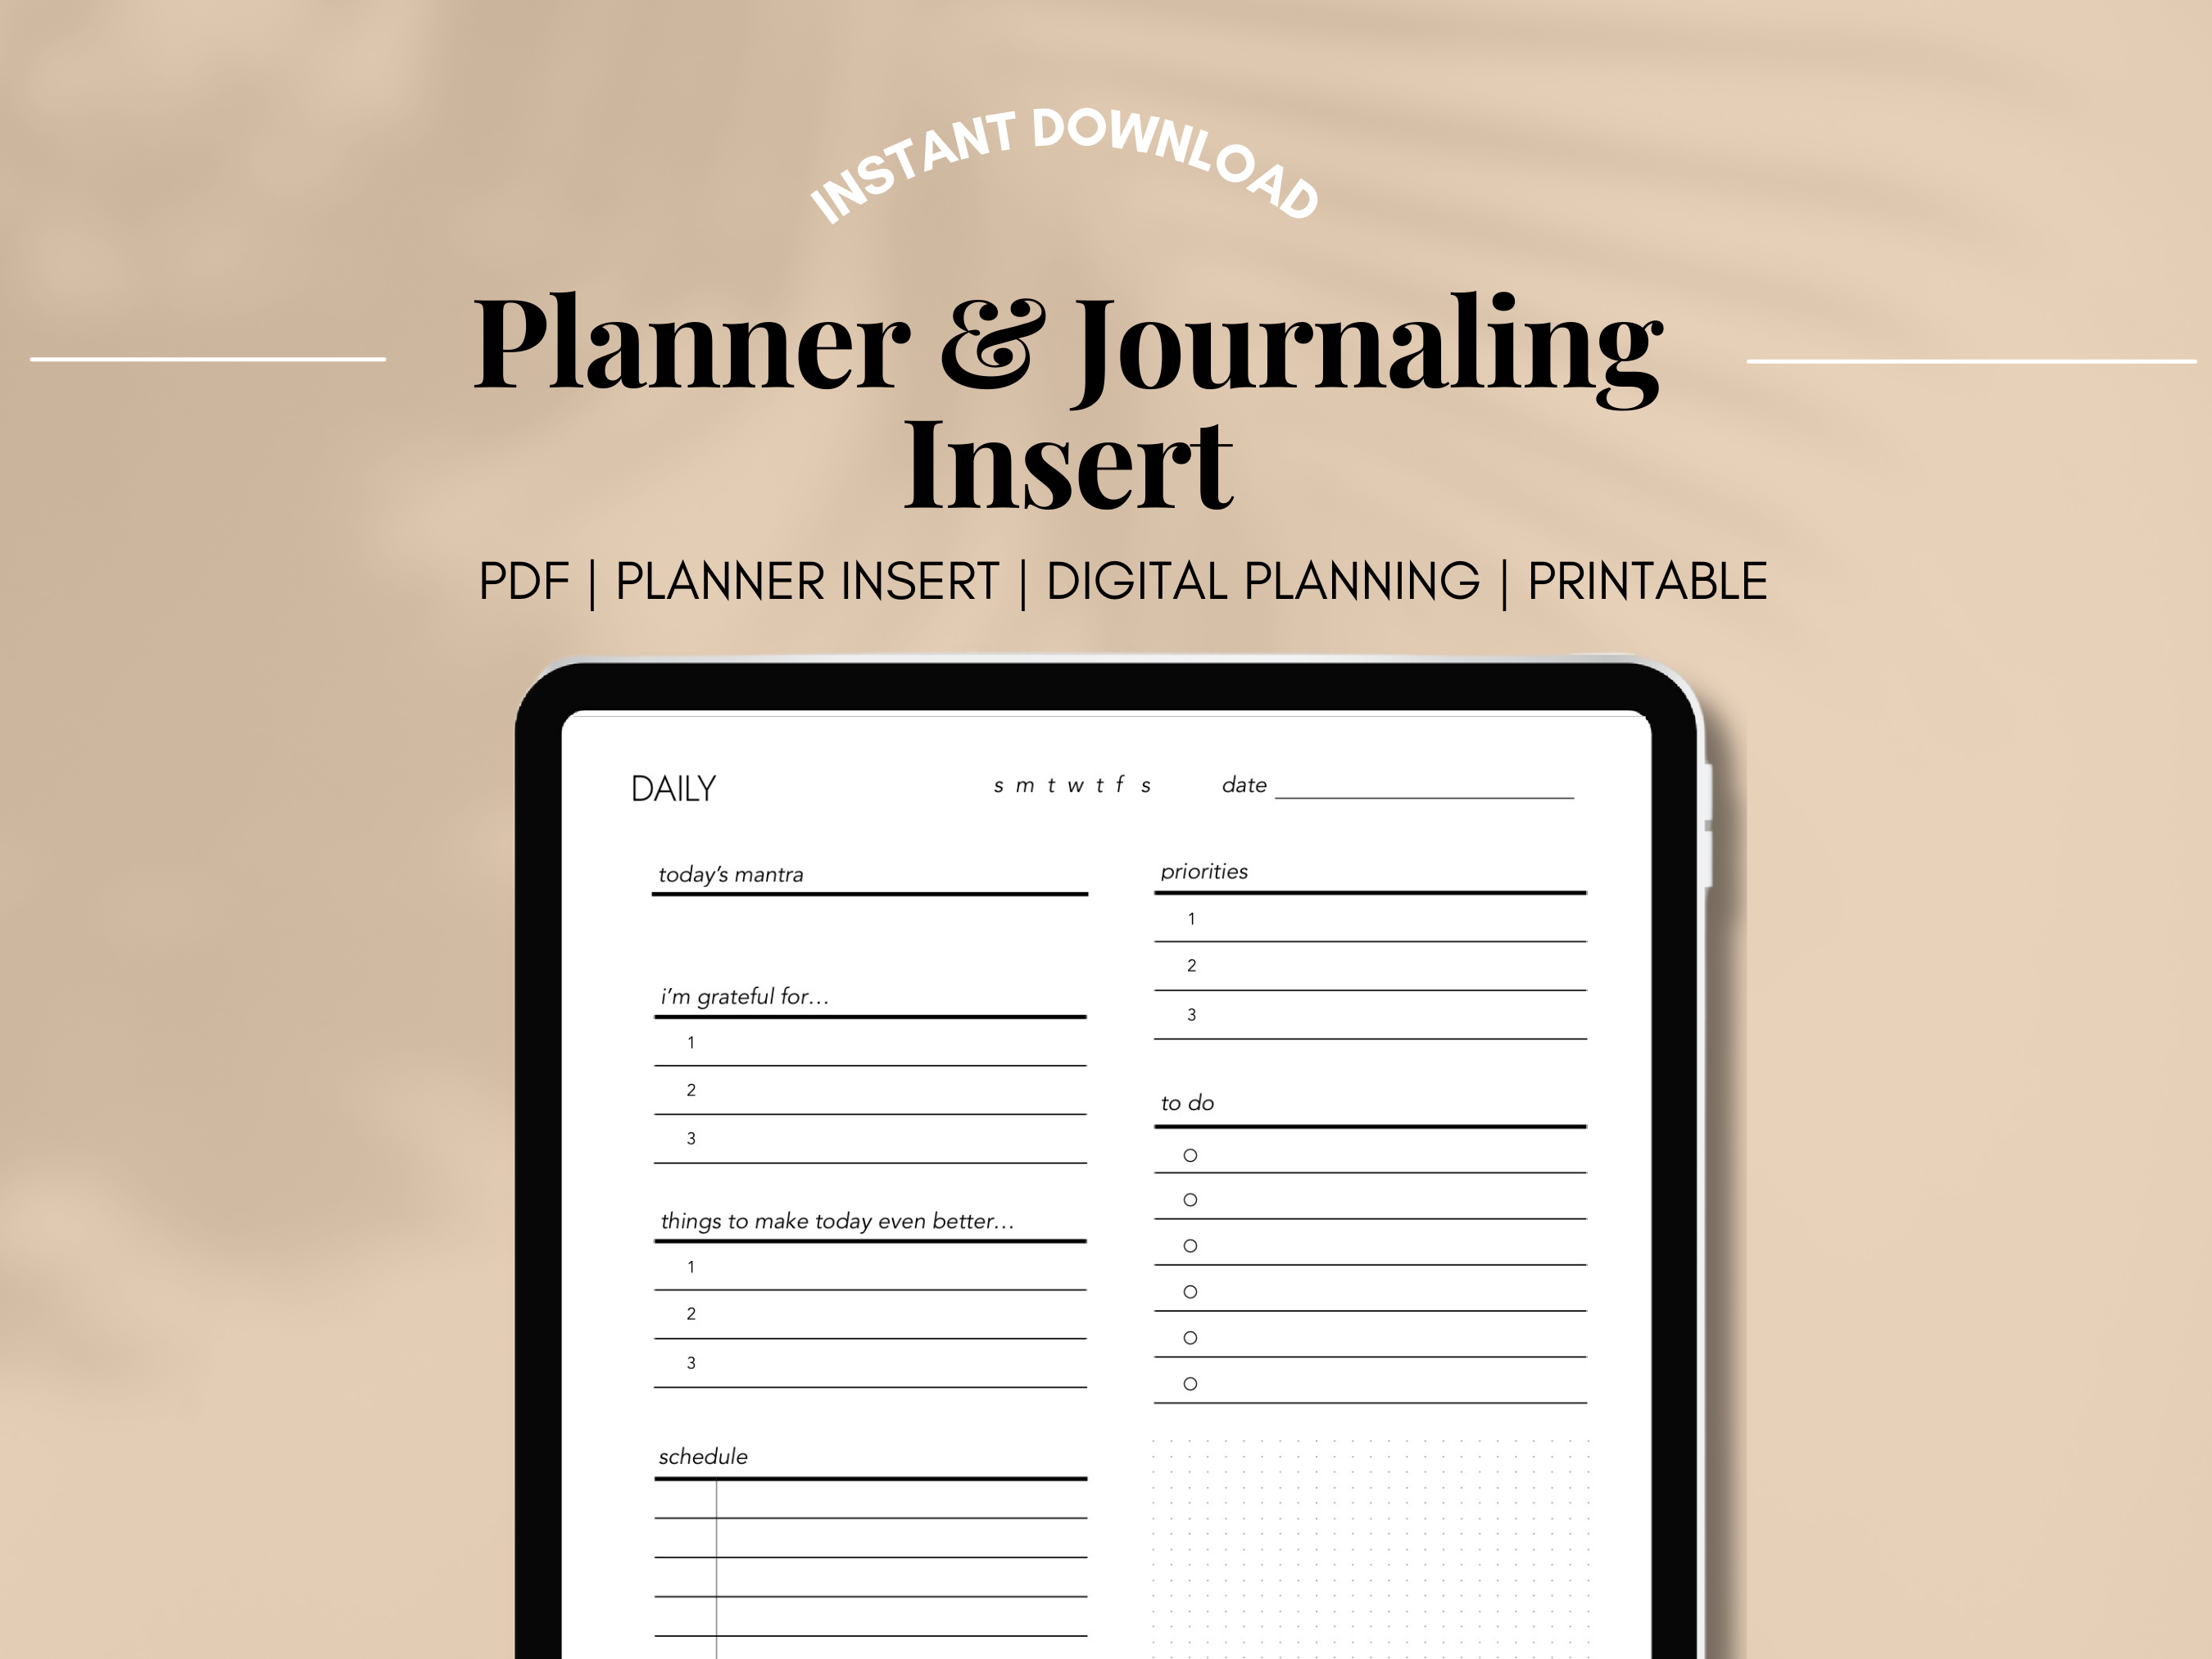 New Release | Planner & Journaling Insert